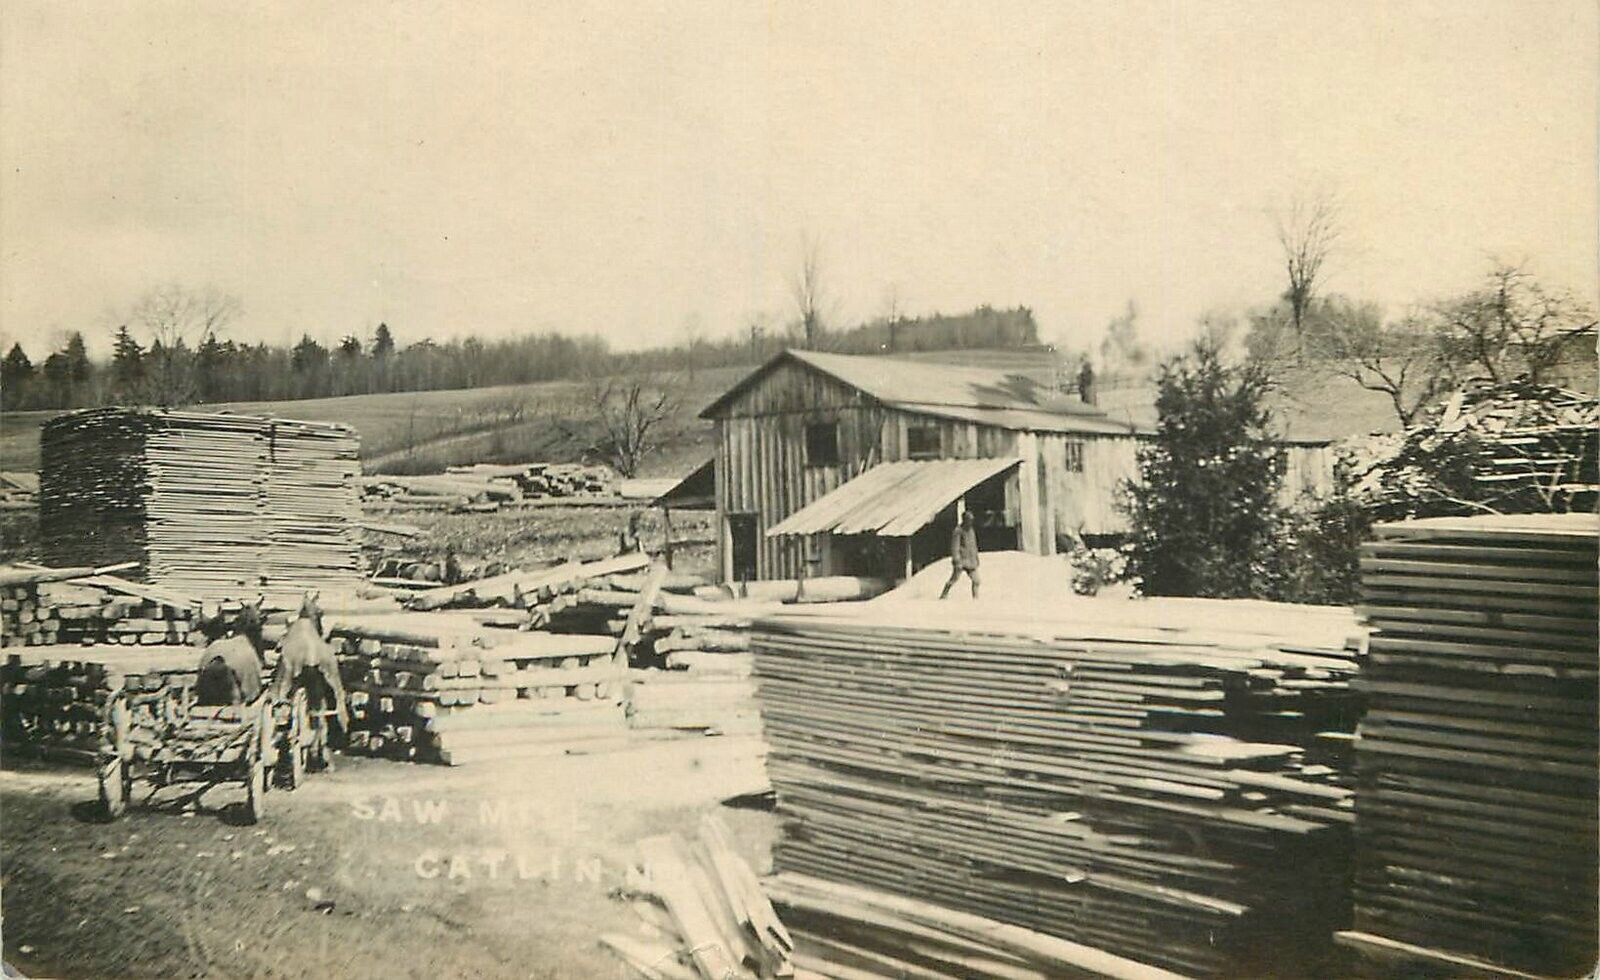 Postcard RPPC New York Catlin Sawmill logging lumber 1910 23-3691